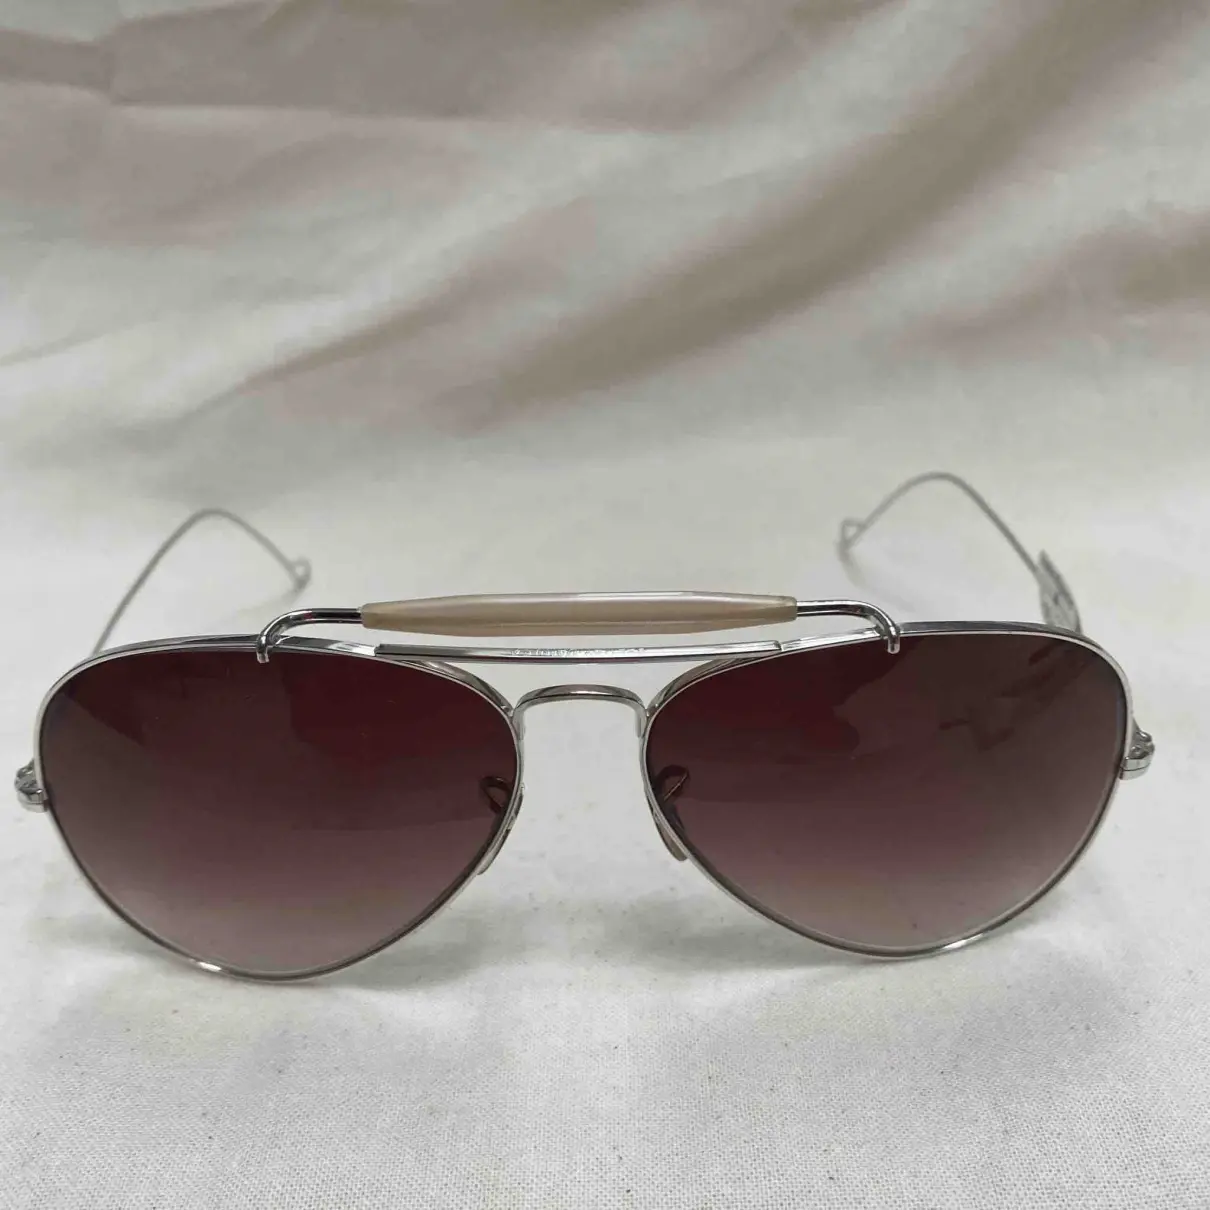 Sunglasses Bausch & Lomb U.S.A - Vintage